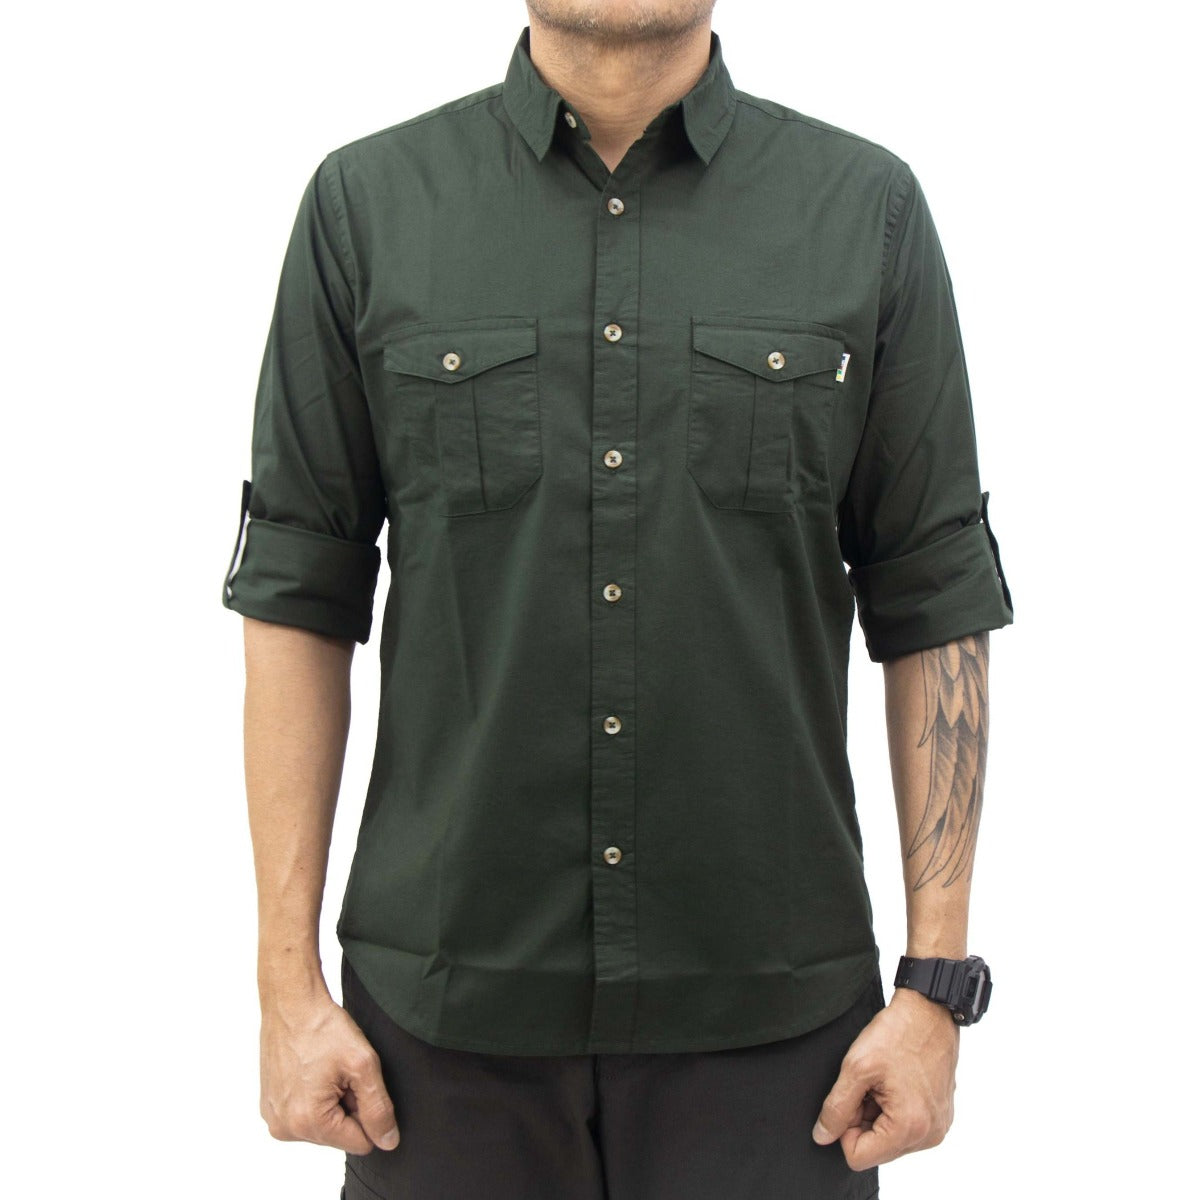 Hiking Shirt - Full Sleeves - Explorer Series - Olive Green